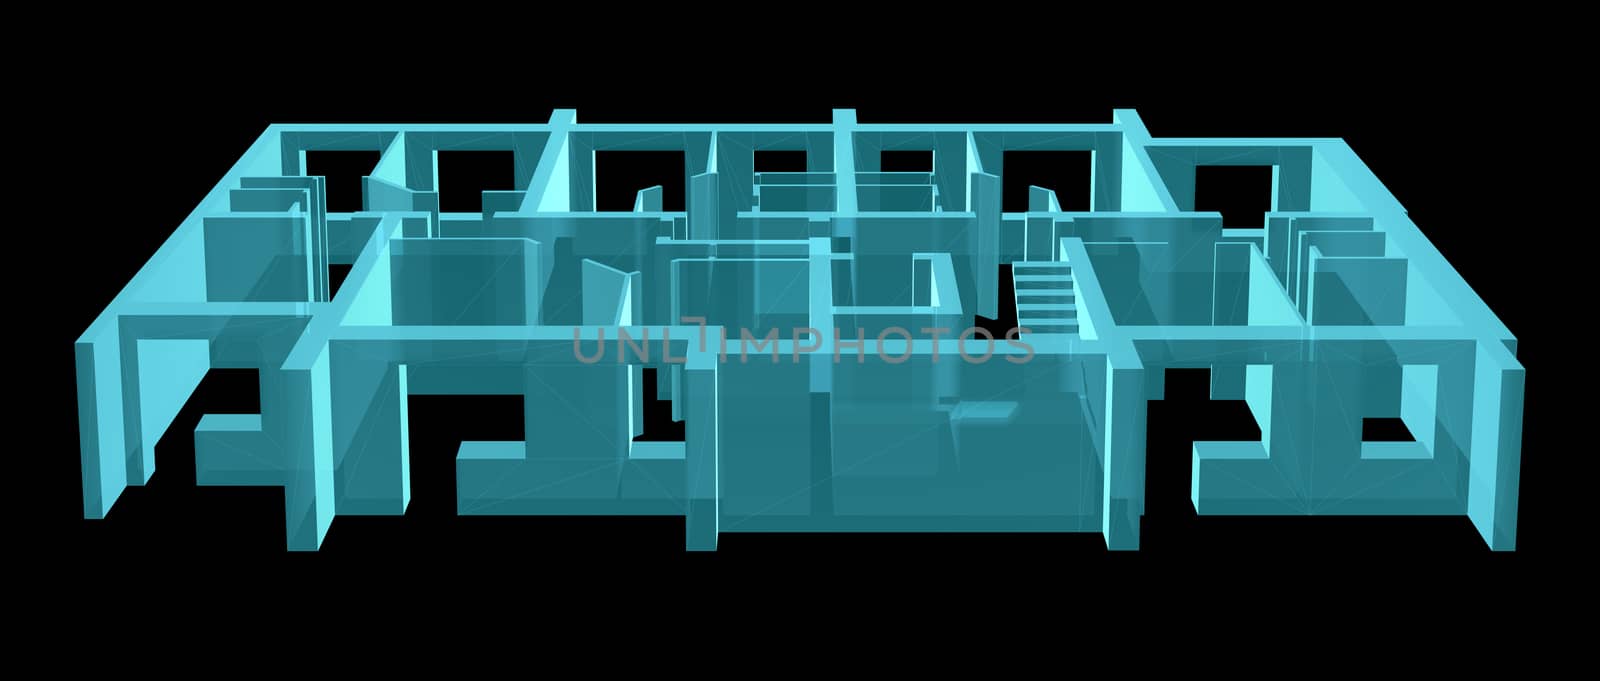 X-Ray. Model Floor of Apartment Block by cherezoff